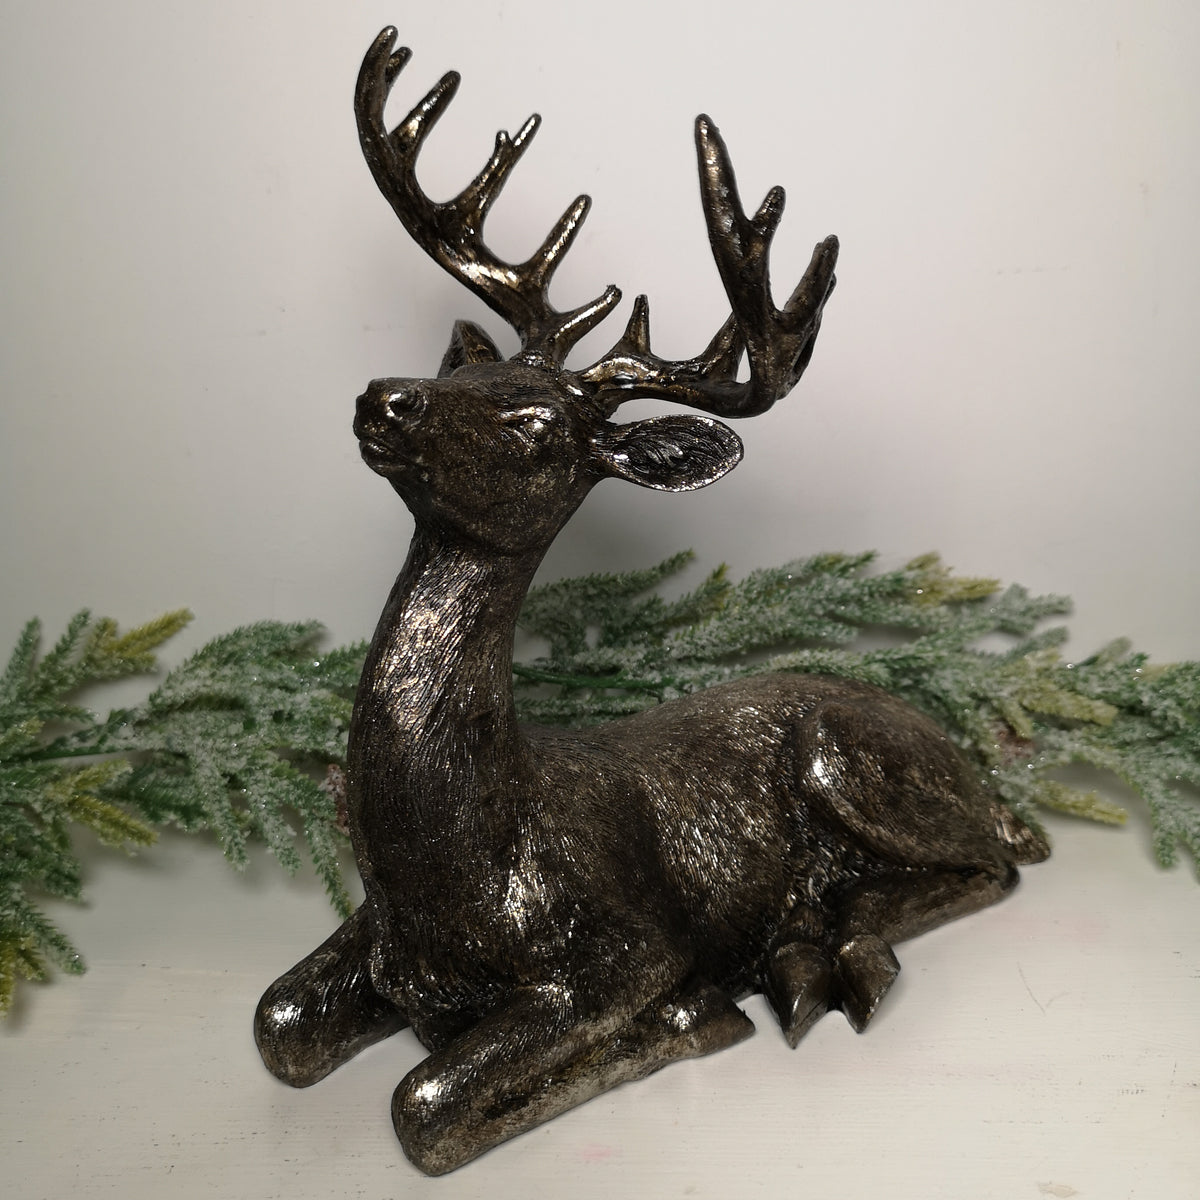 23cm Bronze Effect Sitting Christmas Reindeer Ornament